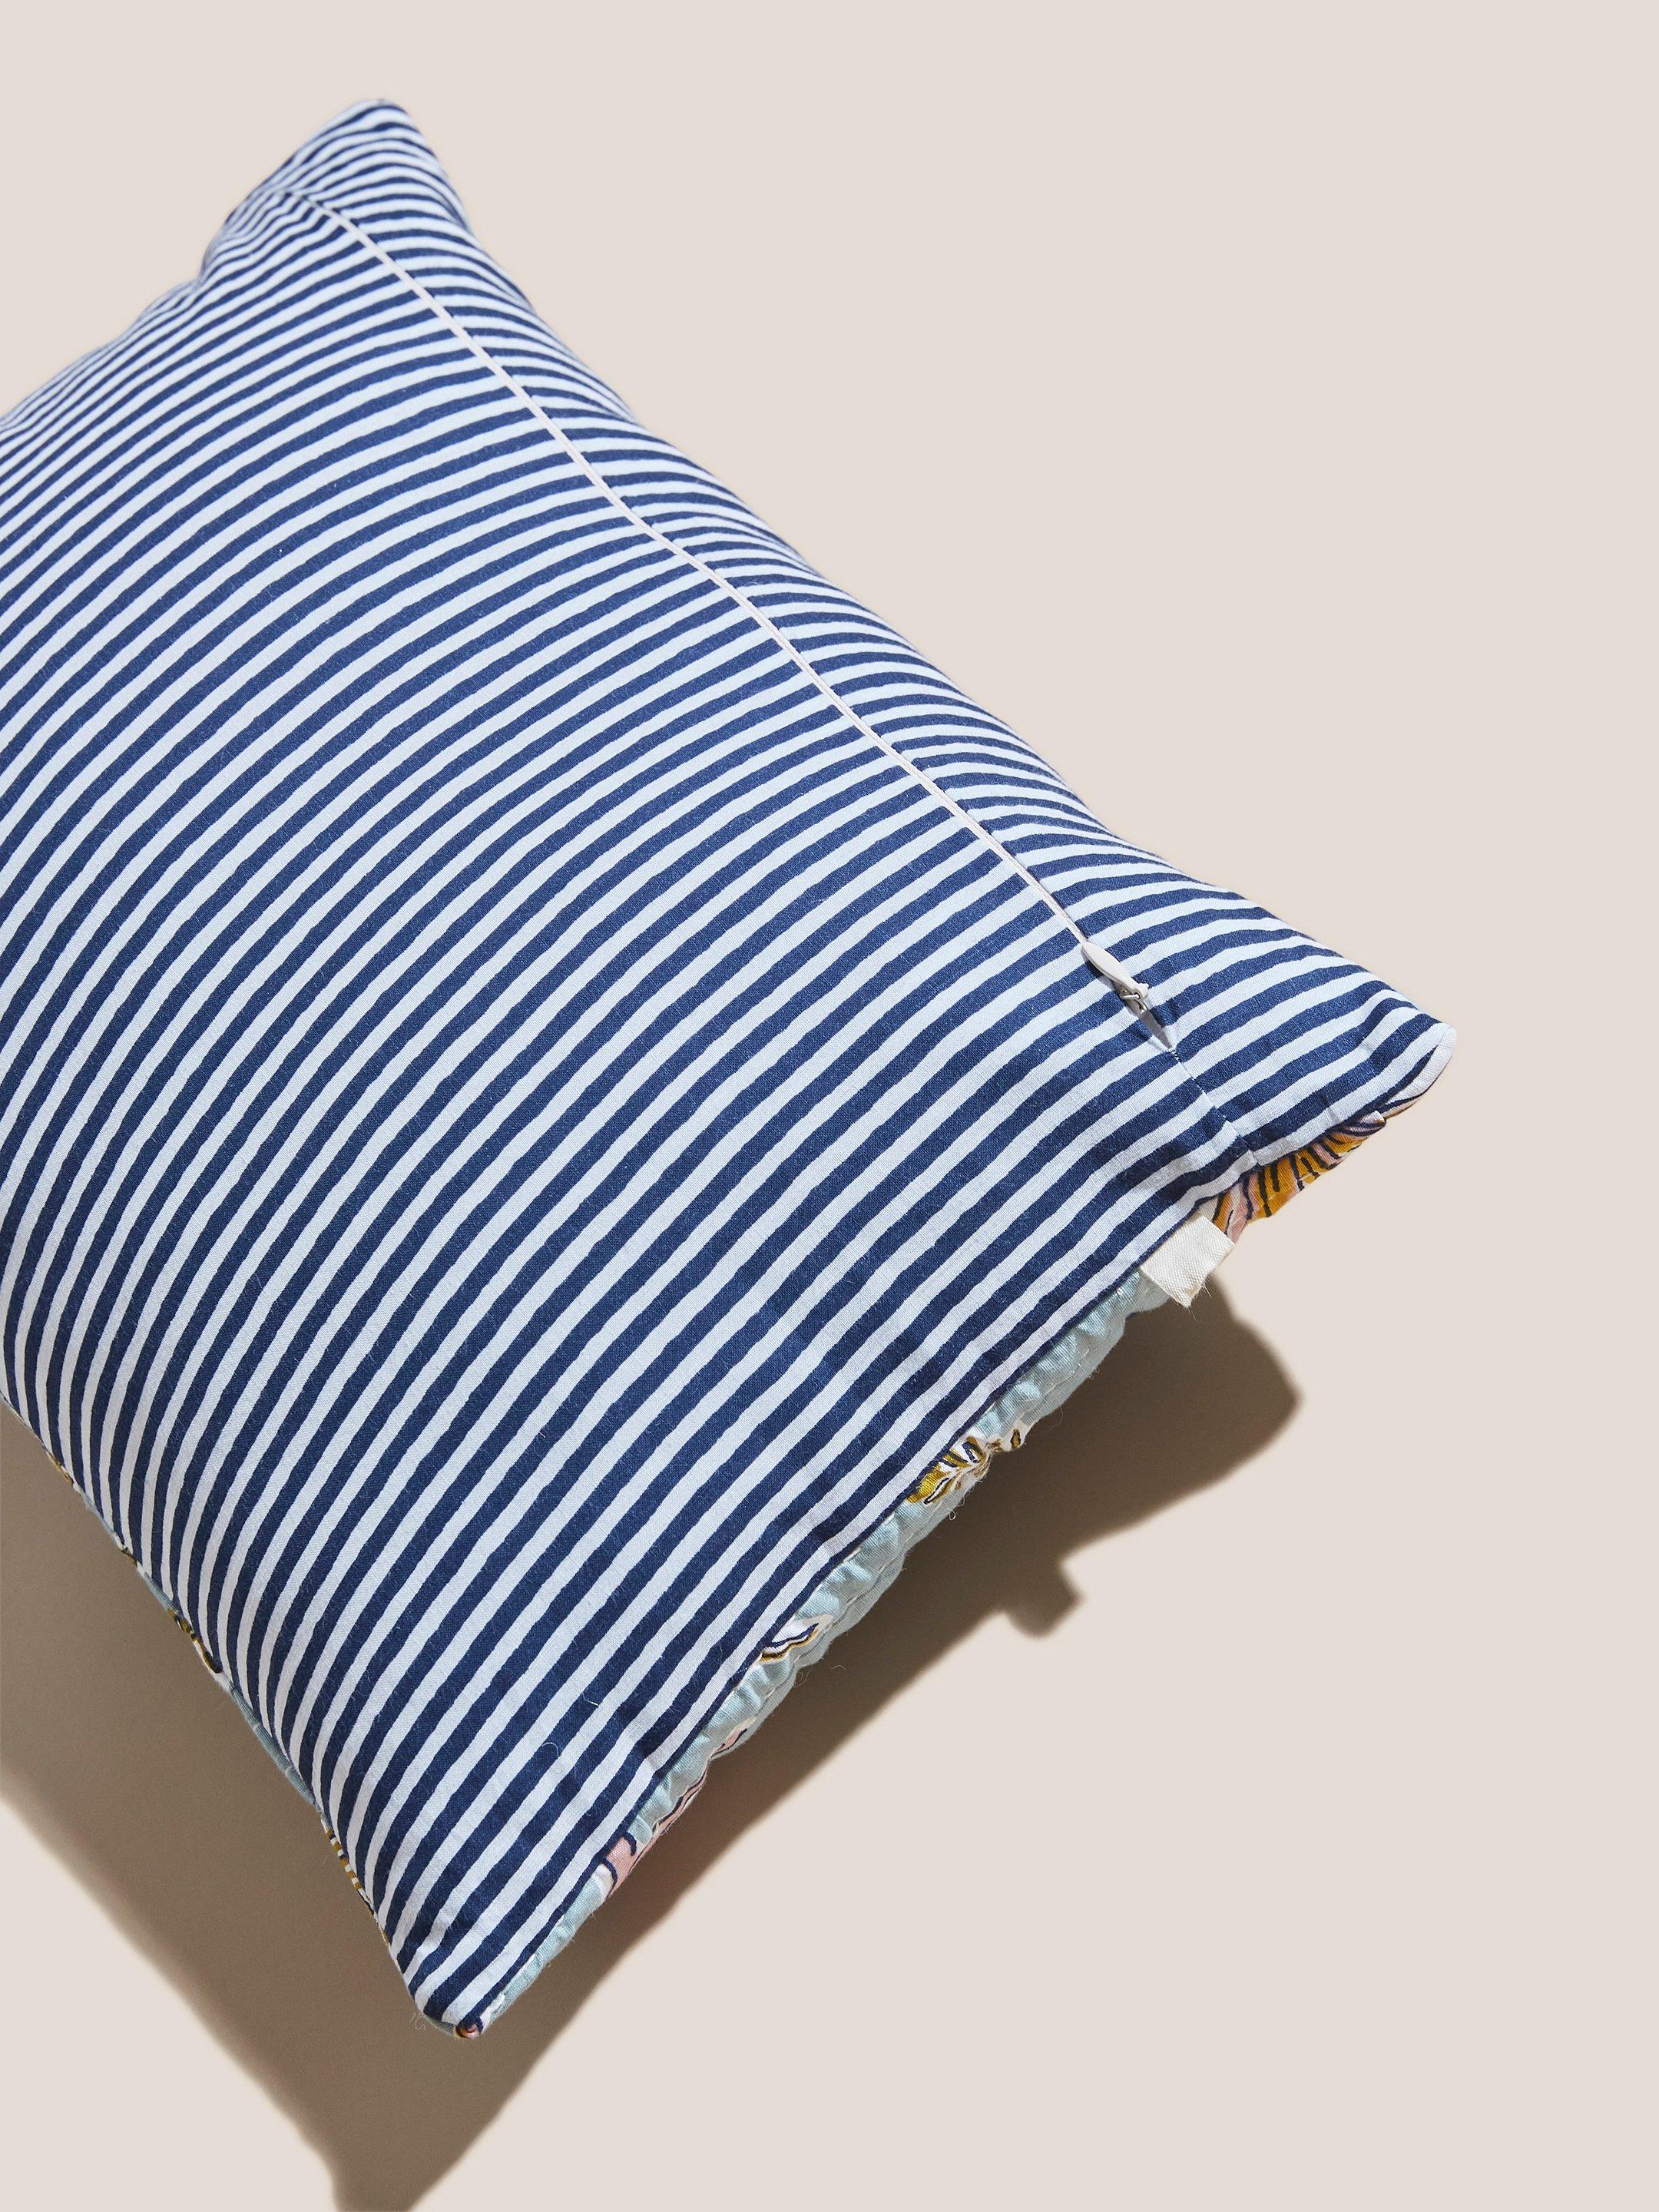 Wonderland Multi Cushion in BLUE MLT - FLAT BACK